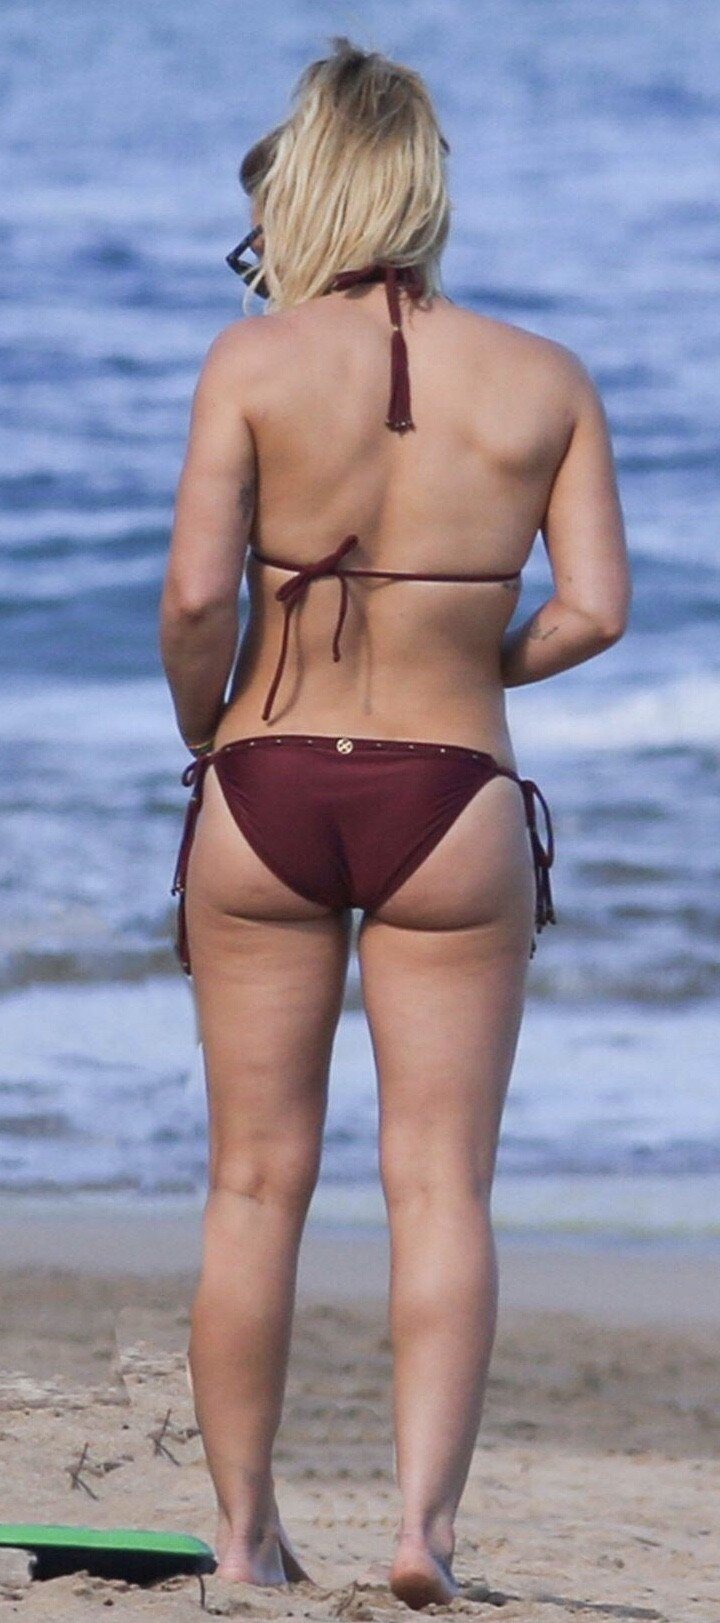 Hilary Duff bikini ass picture